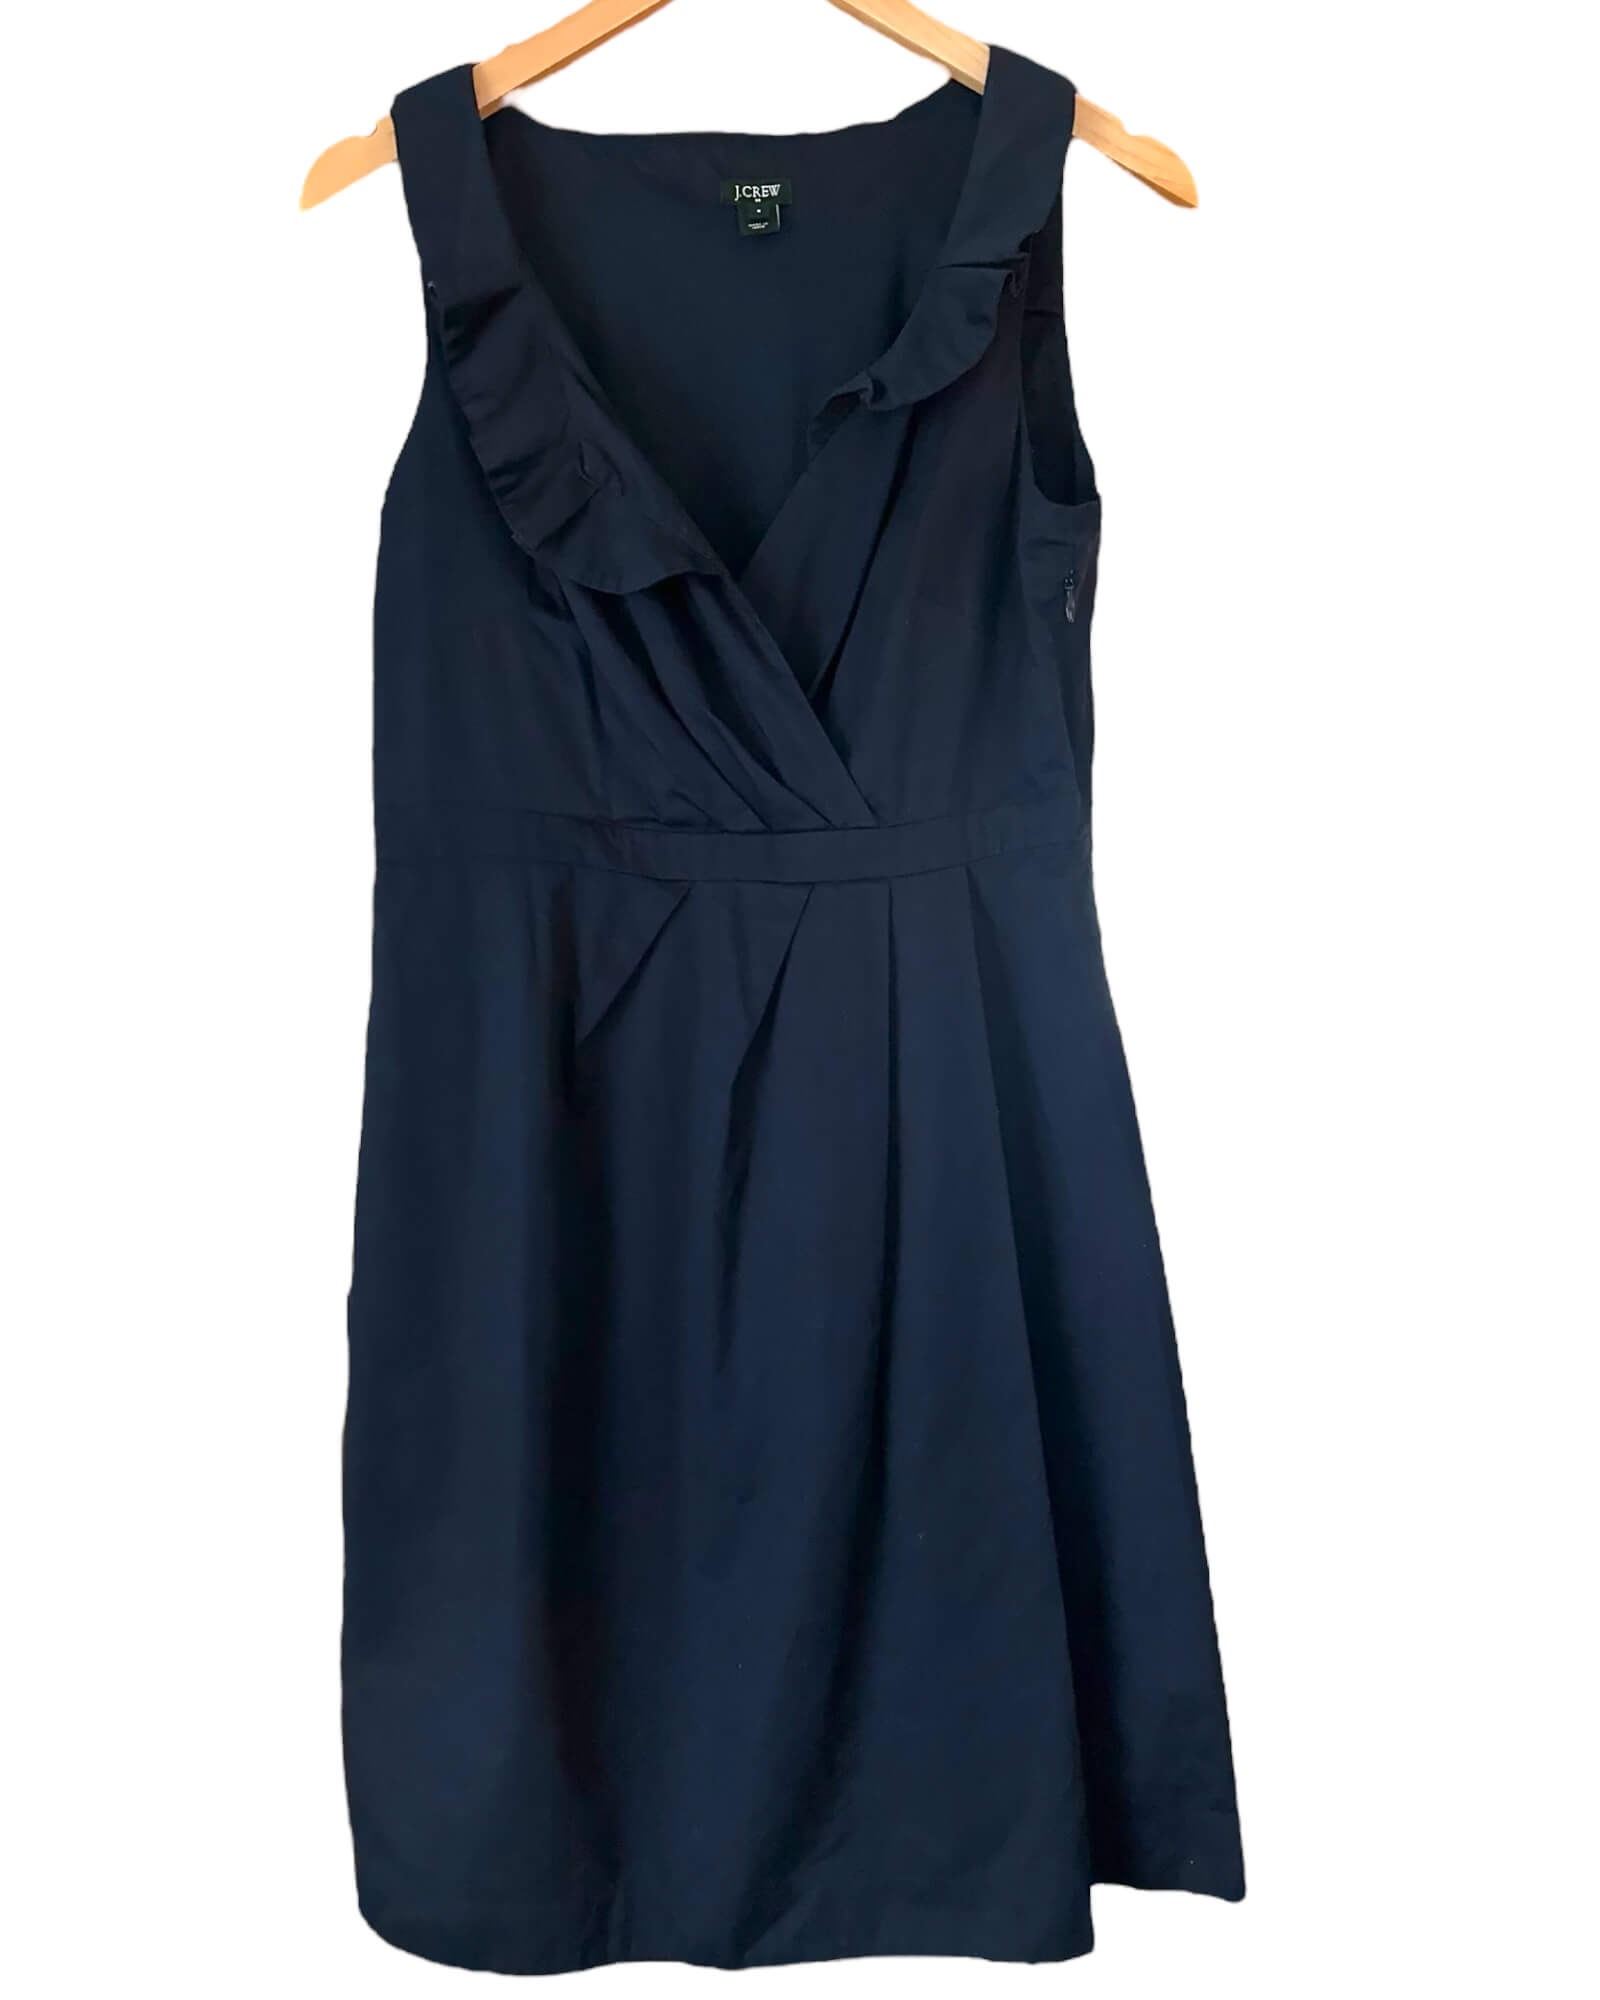 Dark Winter J.CREW navy blue sleeveless ruffle dress